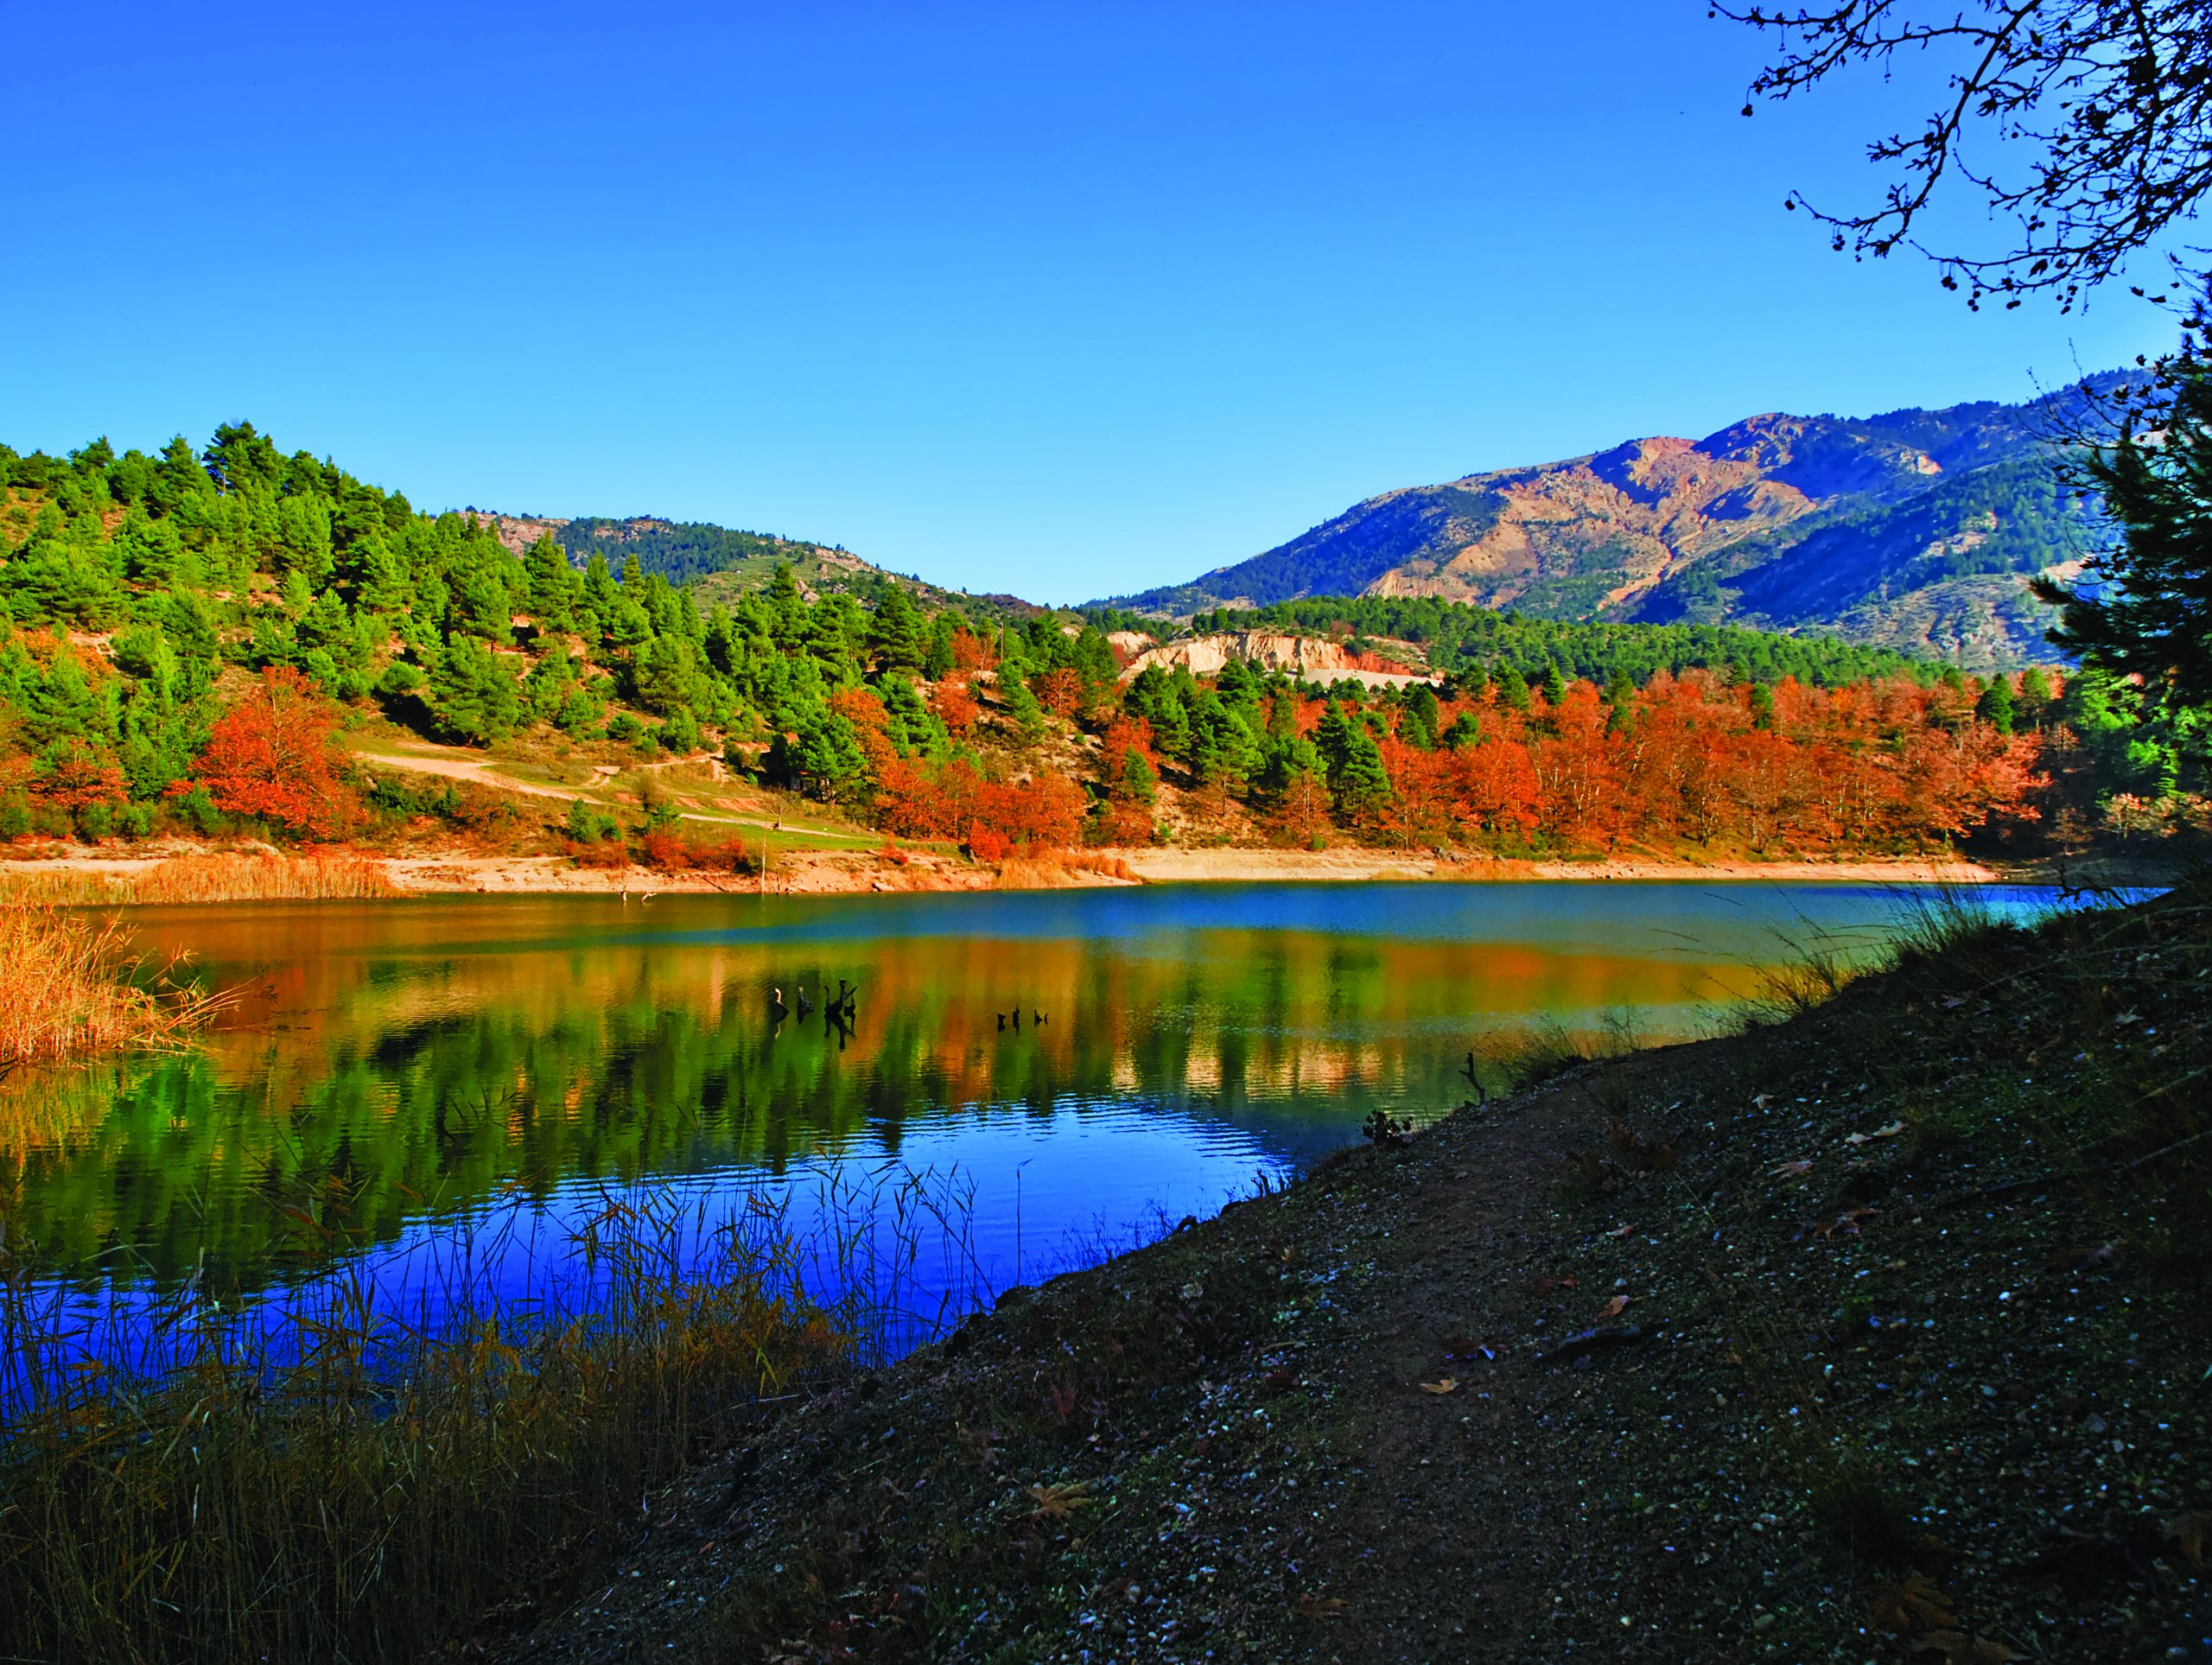 Tsivlou lake at the banks of Helmos mountain in Peloponnese, Greece.